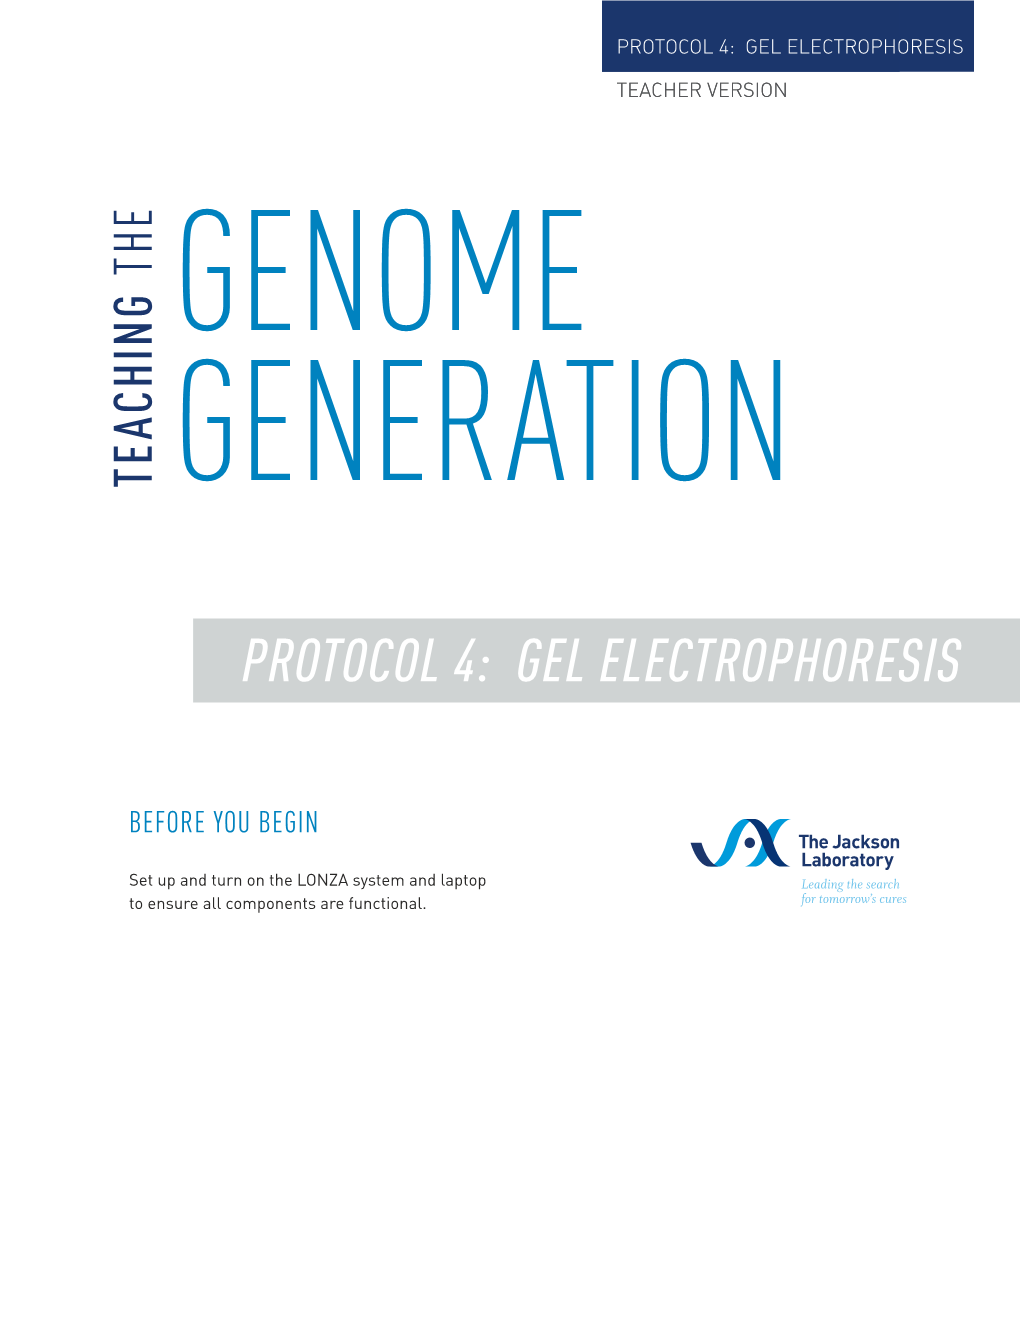 Protocol 4: Gel Electrophoresis